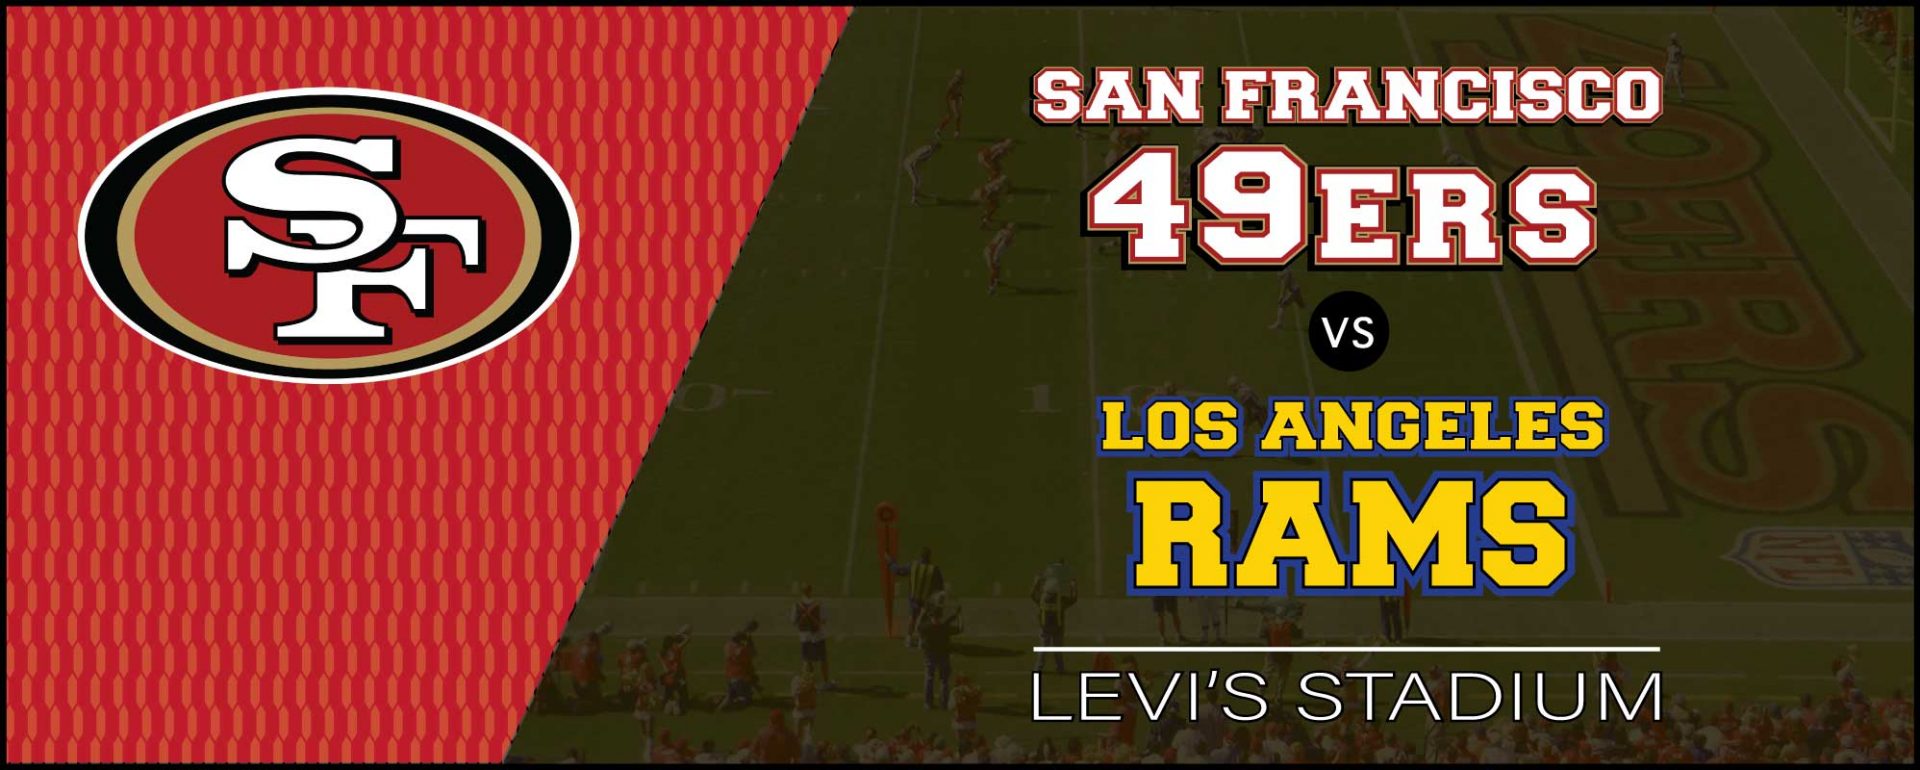 49ers vs. Rams at Levi's Stadium